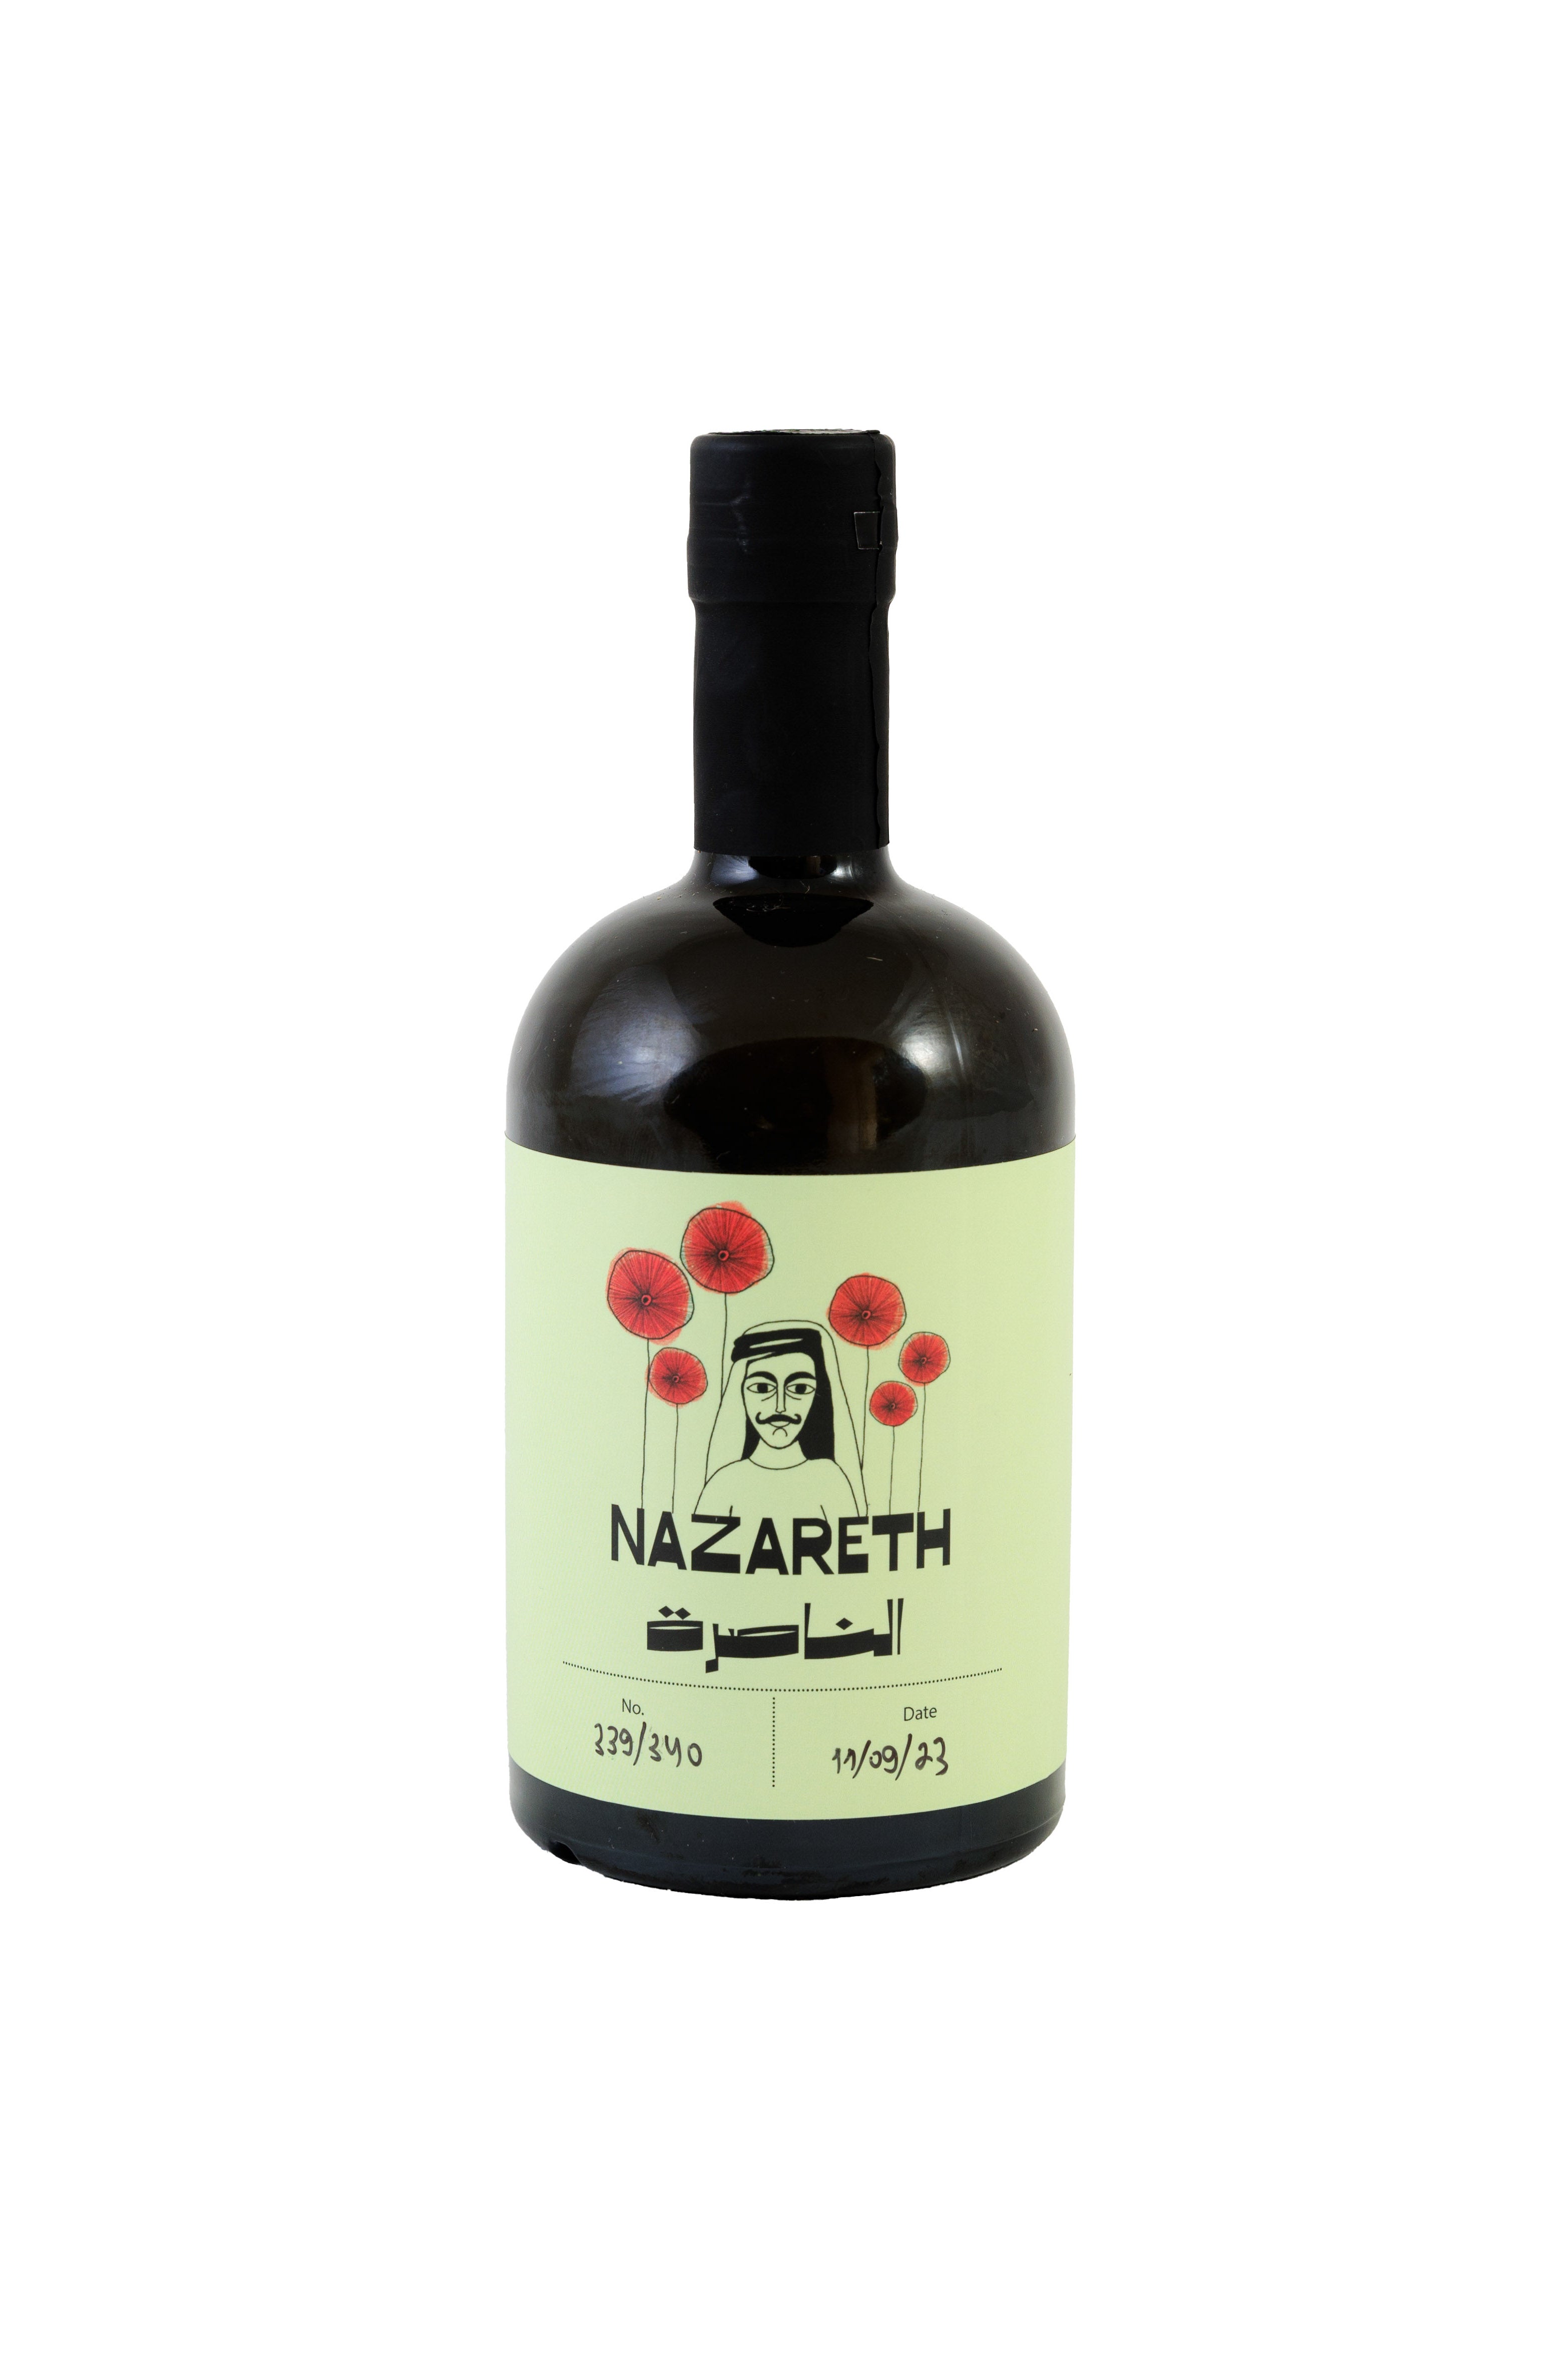 Nazareth's Picholine Cold Pressed Olive Oil - Distinct Peppery Taste [Harvest Year: 2023]